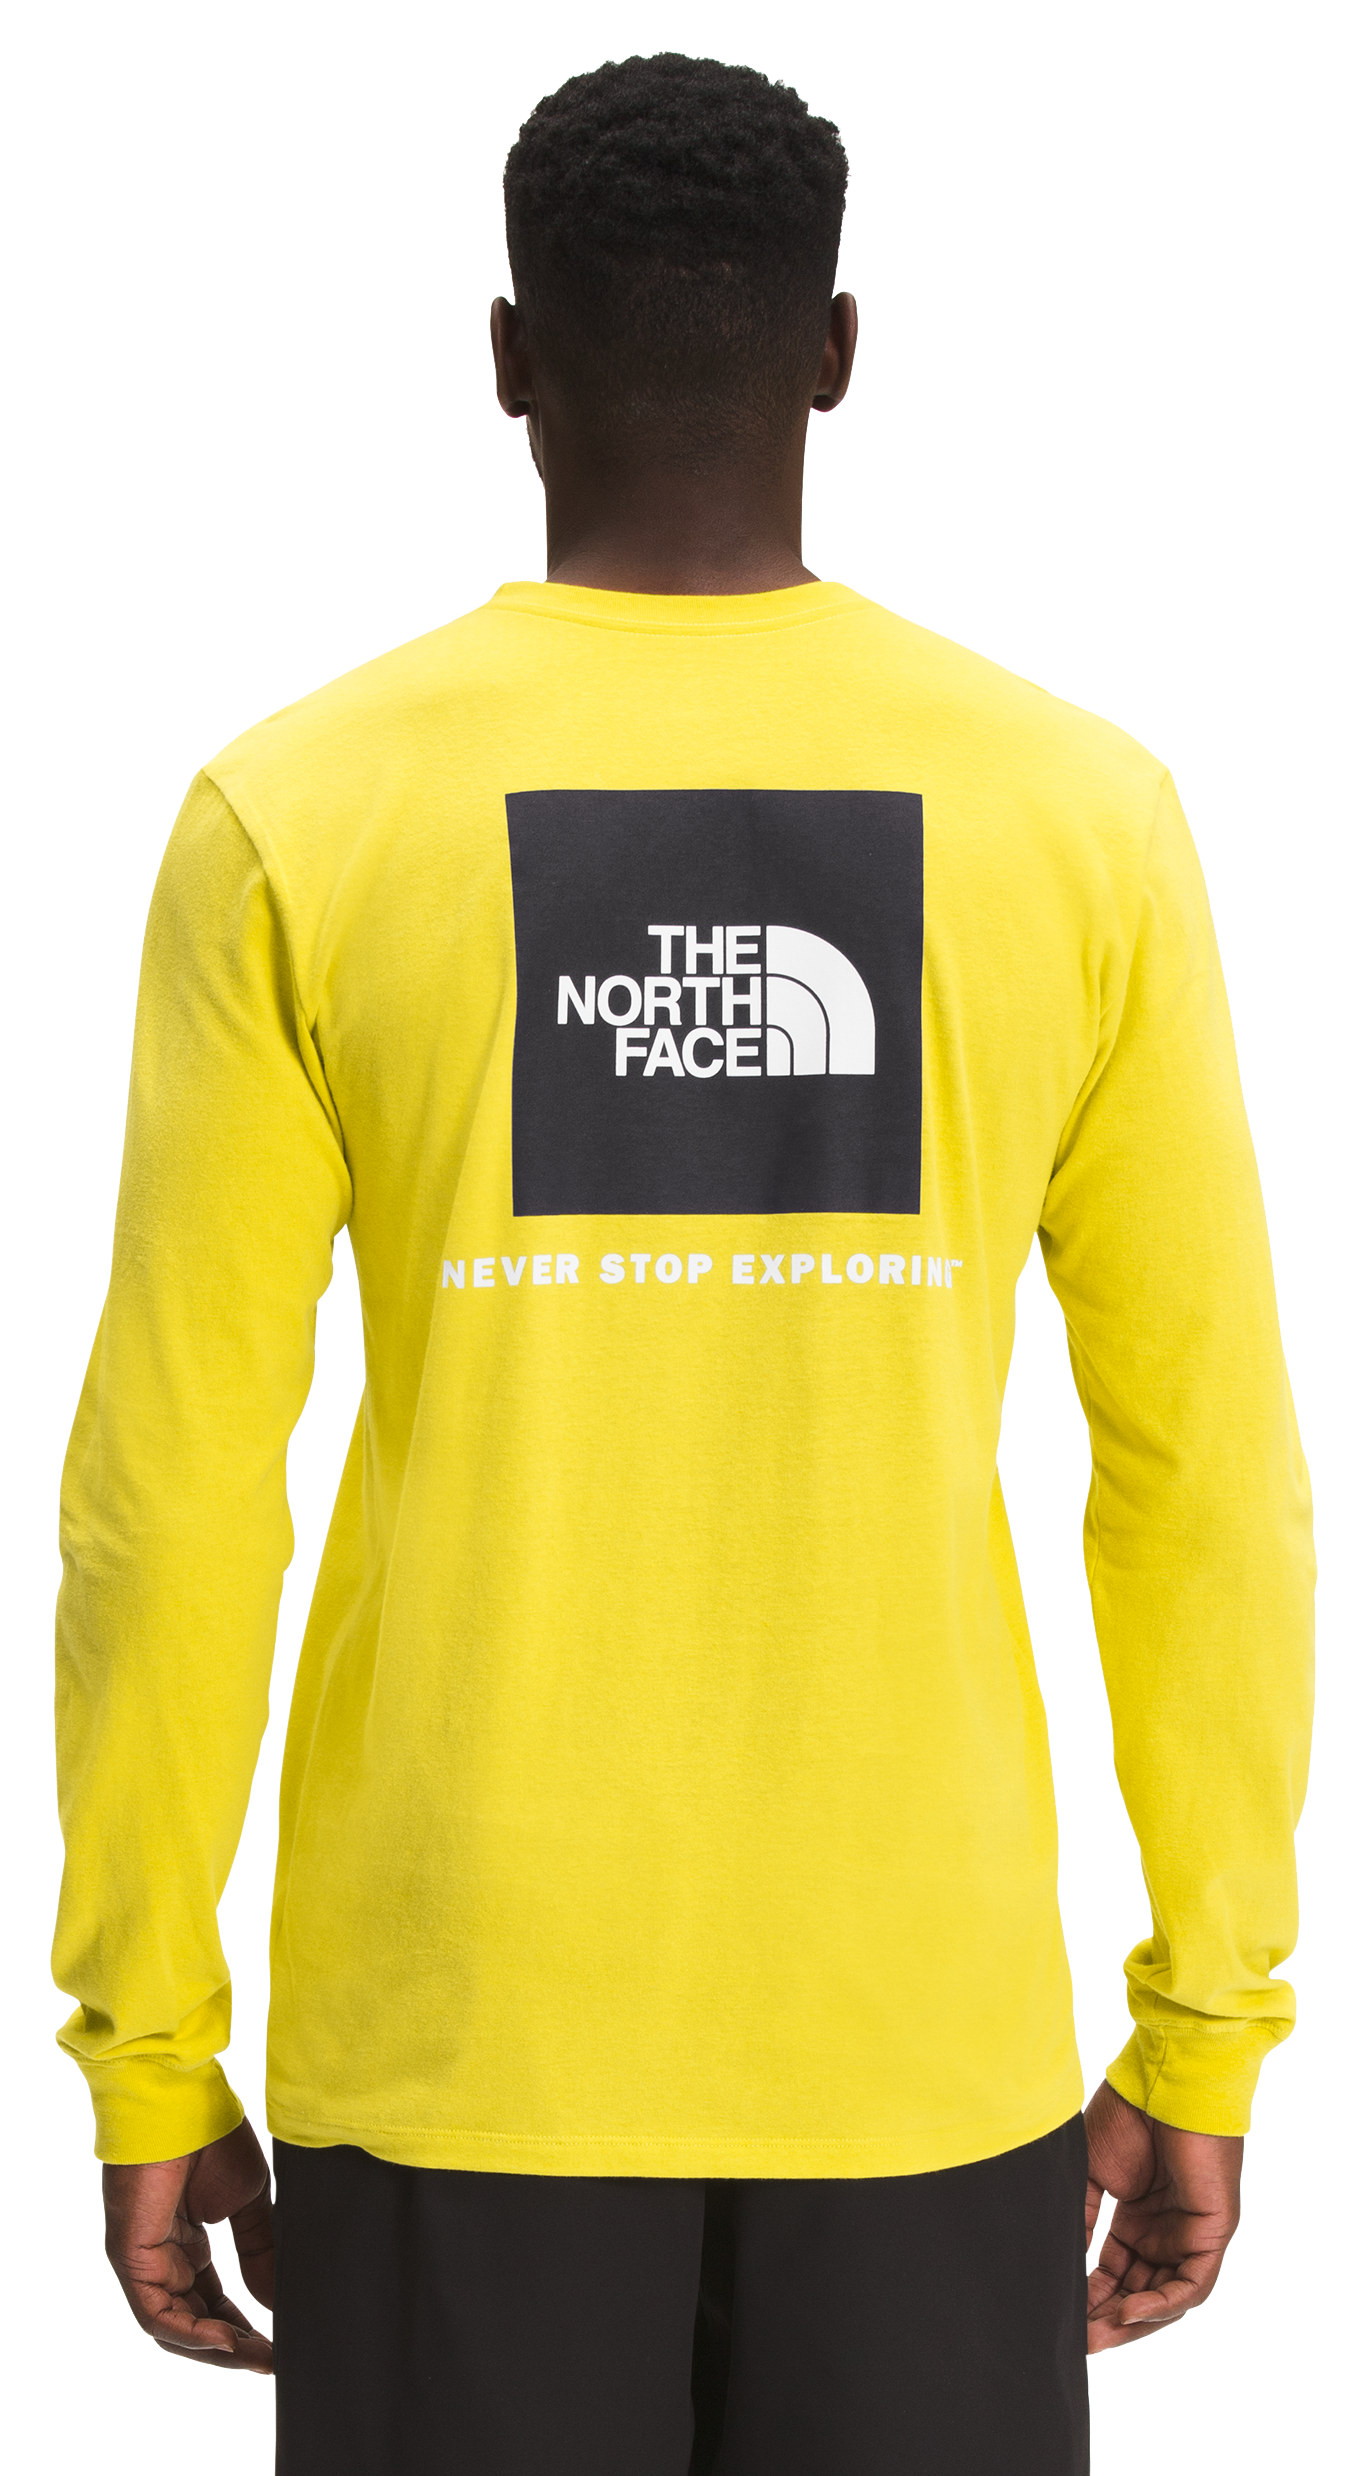 The North Face Box NSE Long-Sleeve Shirt for Men - Acid Yellow/TNF Black - L